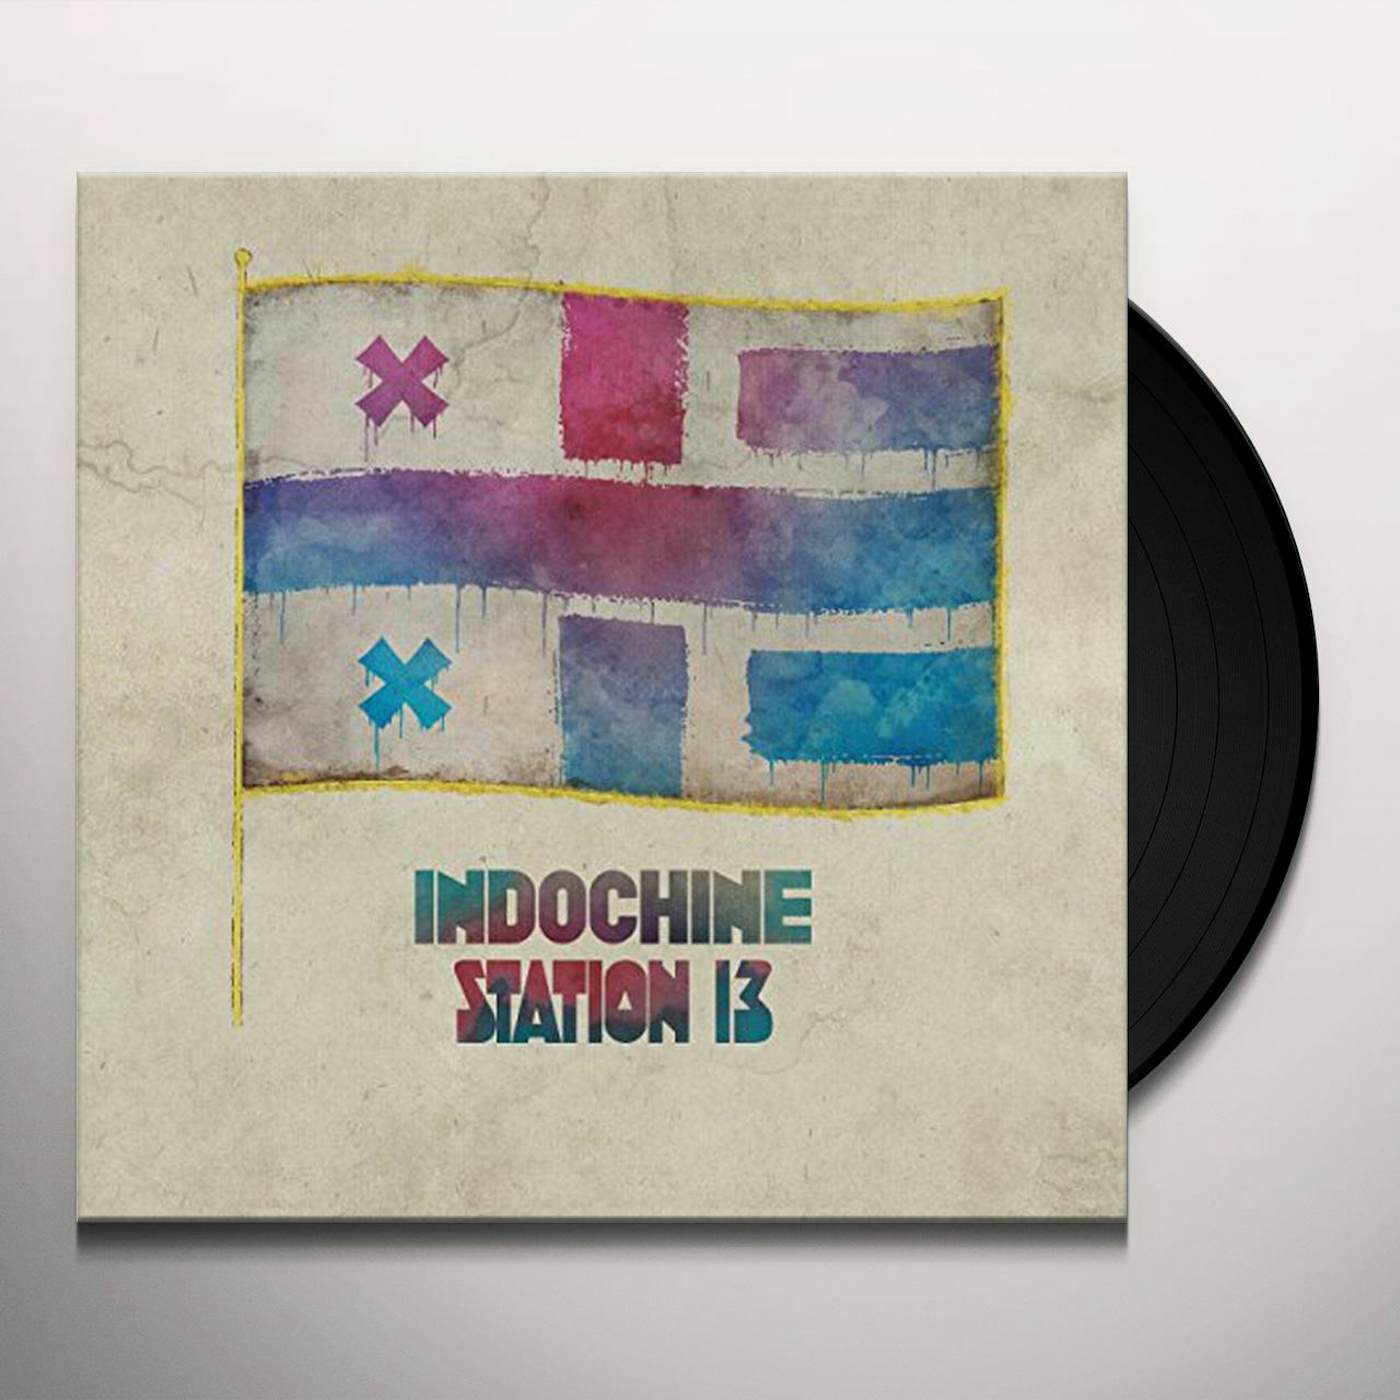 Indochine Station 13 Vinyl Record